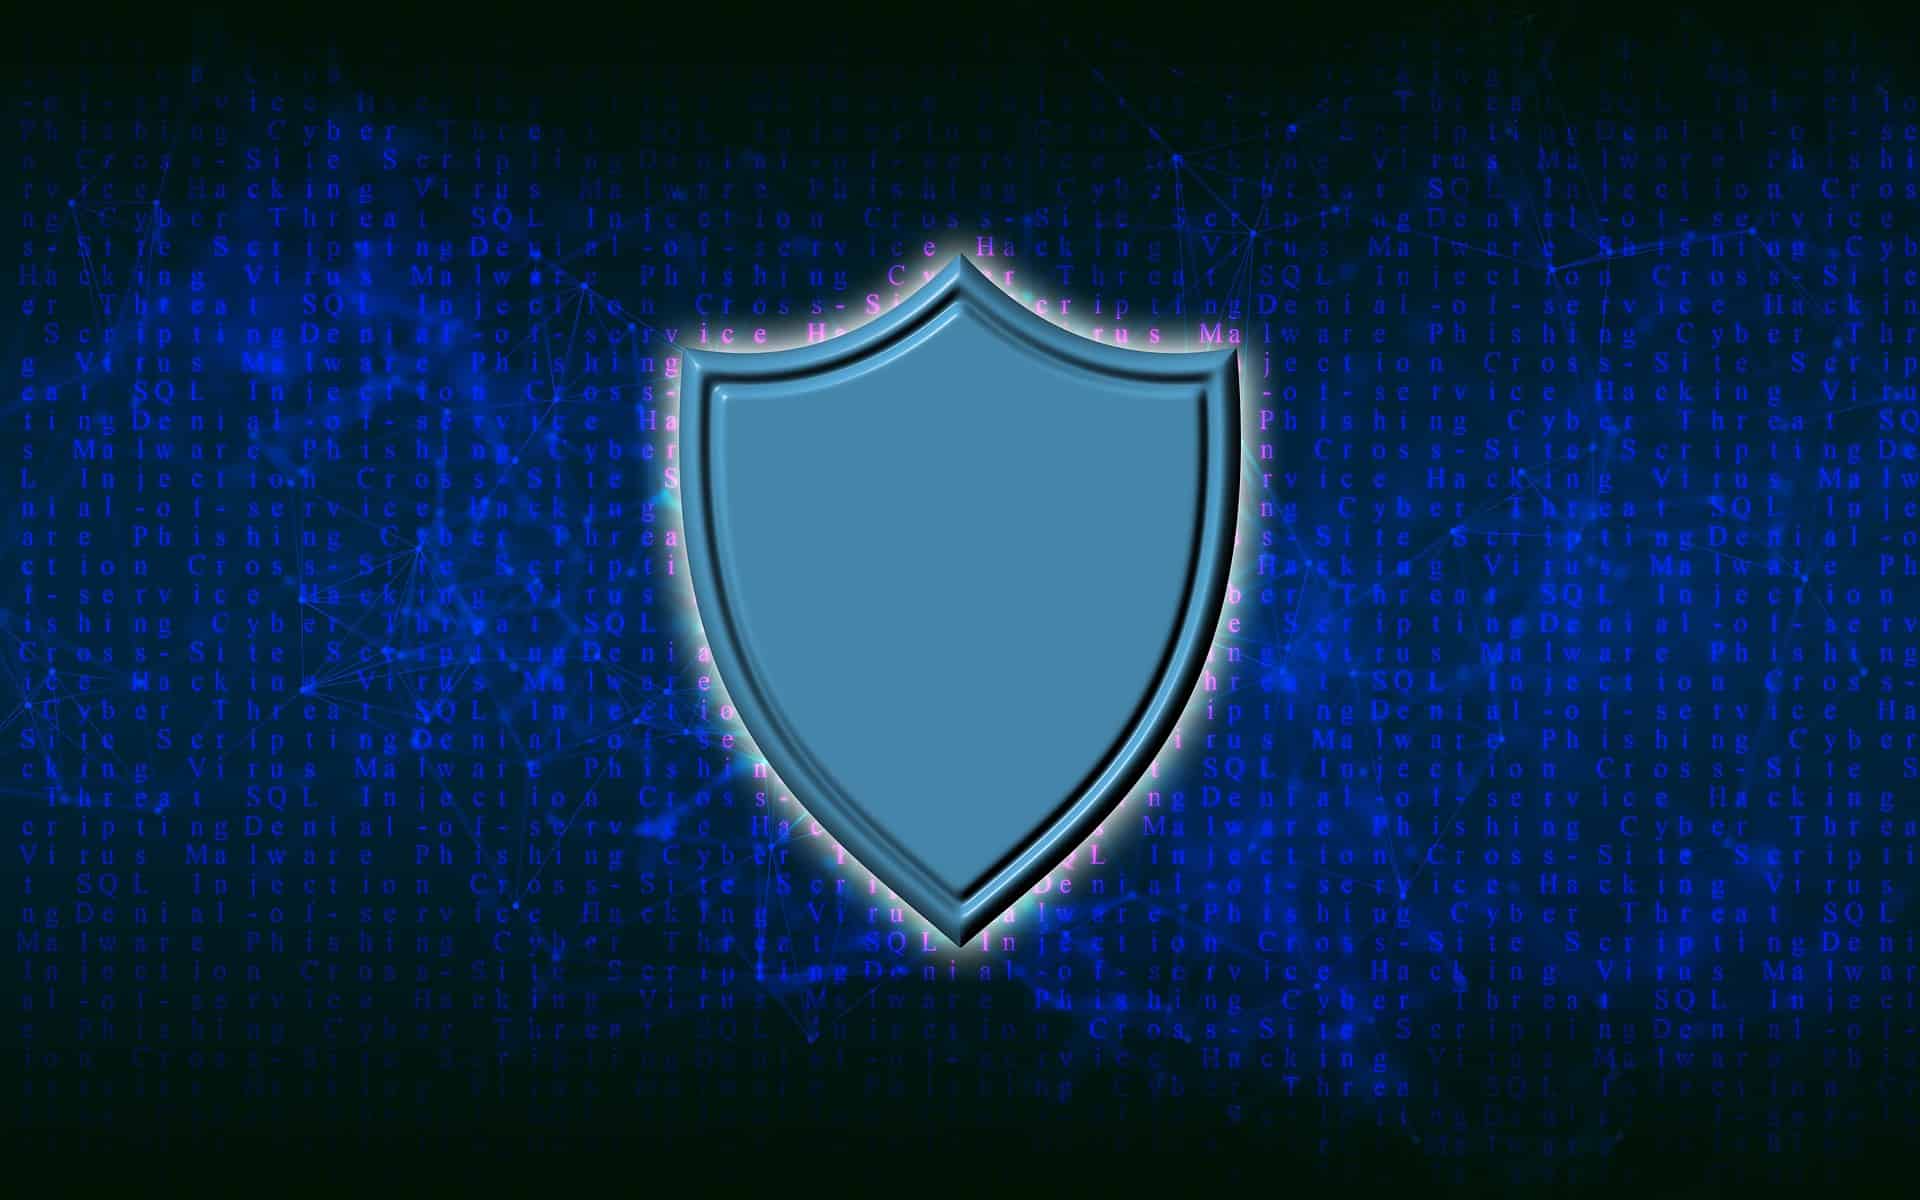 a blue shield on a black background